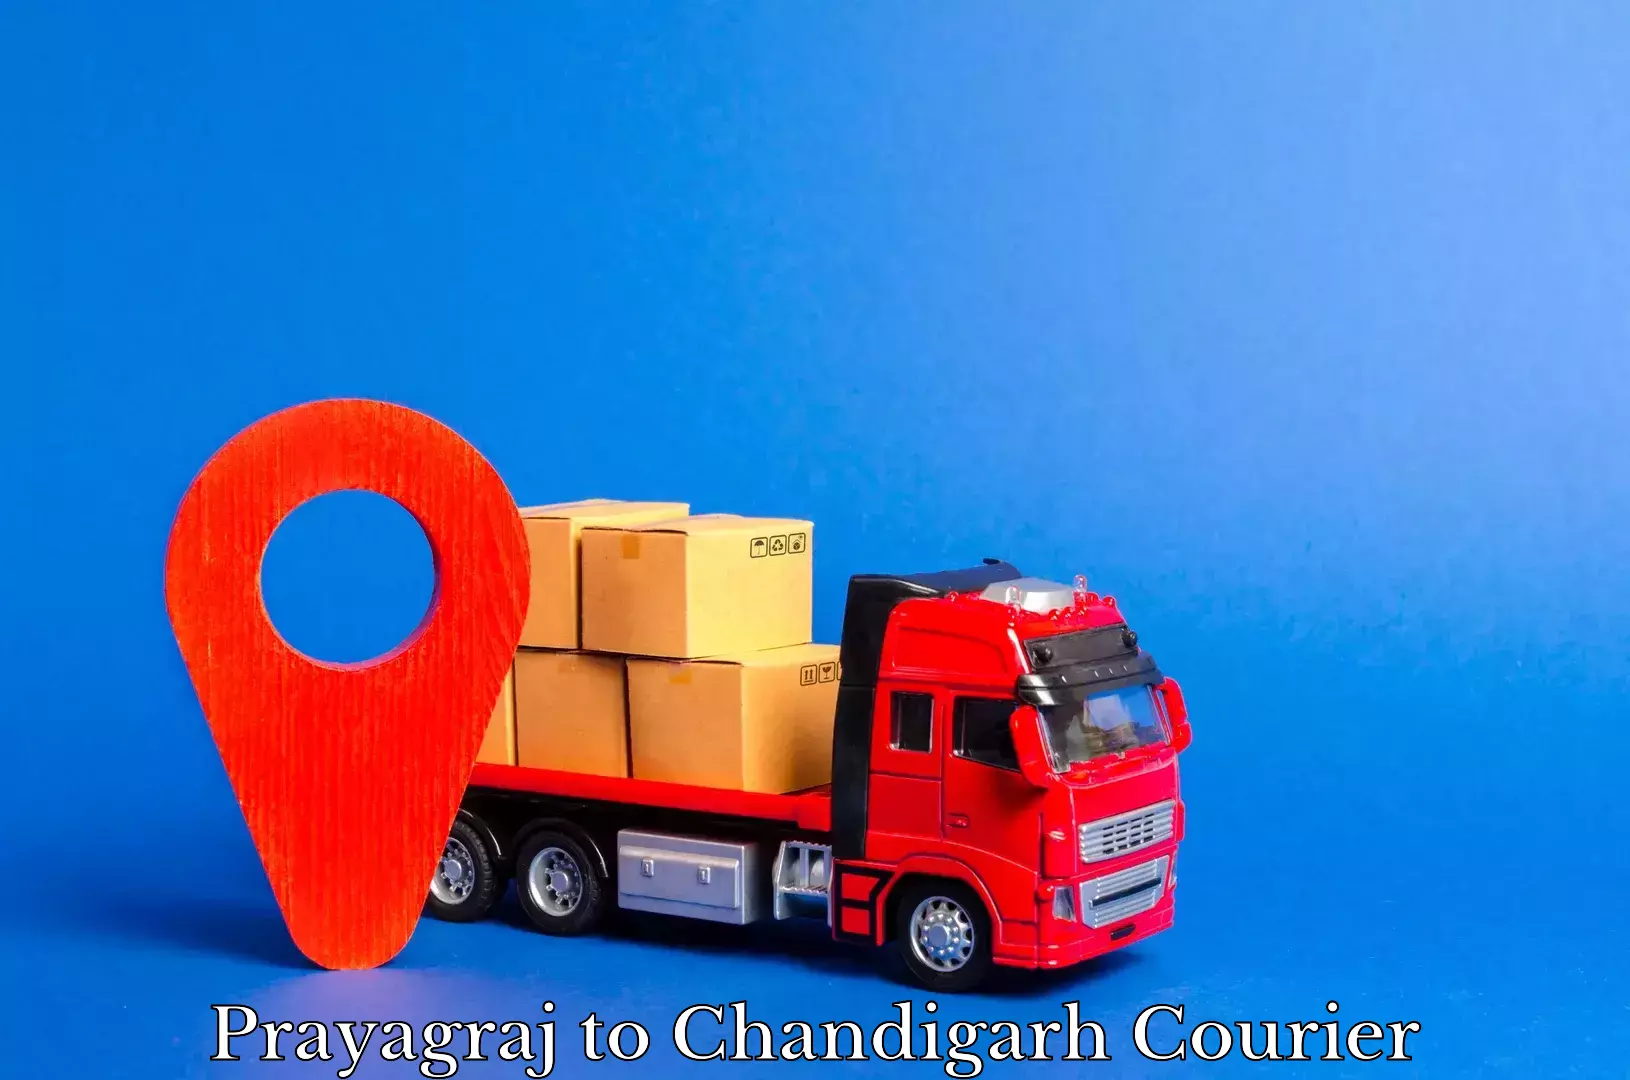 Nationwide delivery network Prayagraj to Chandigarh